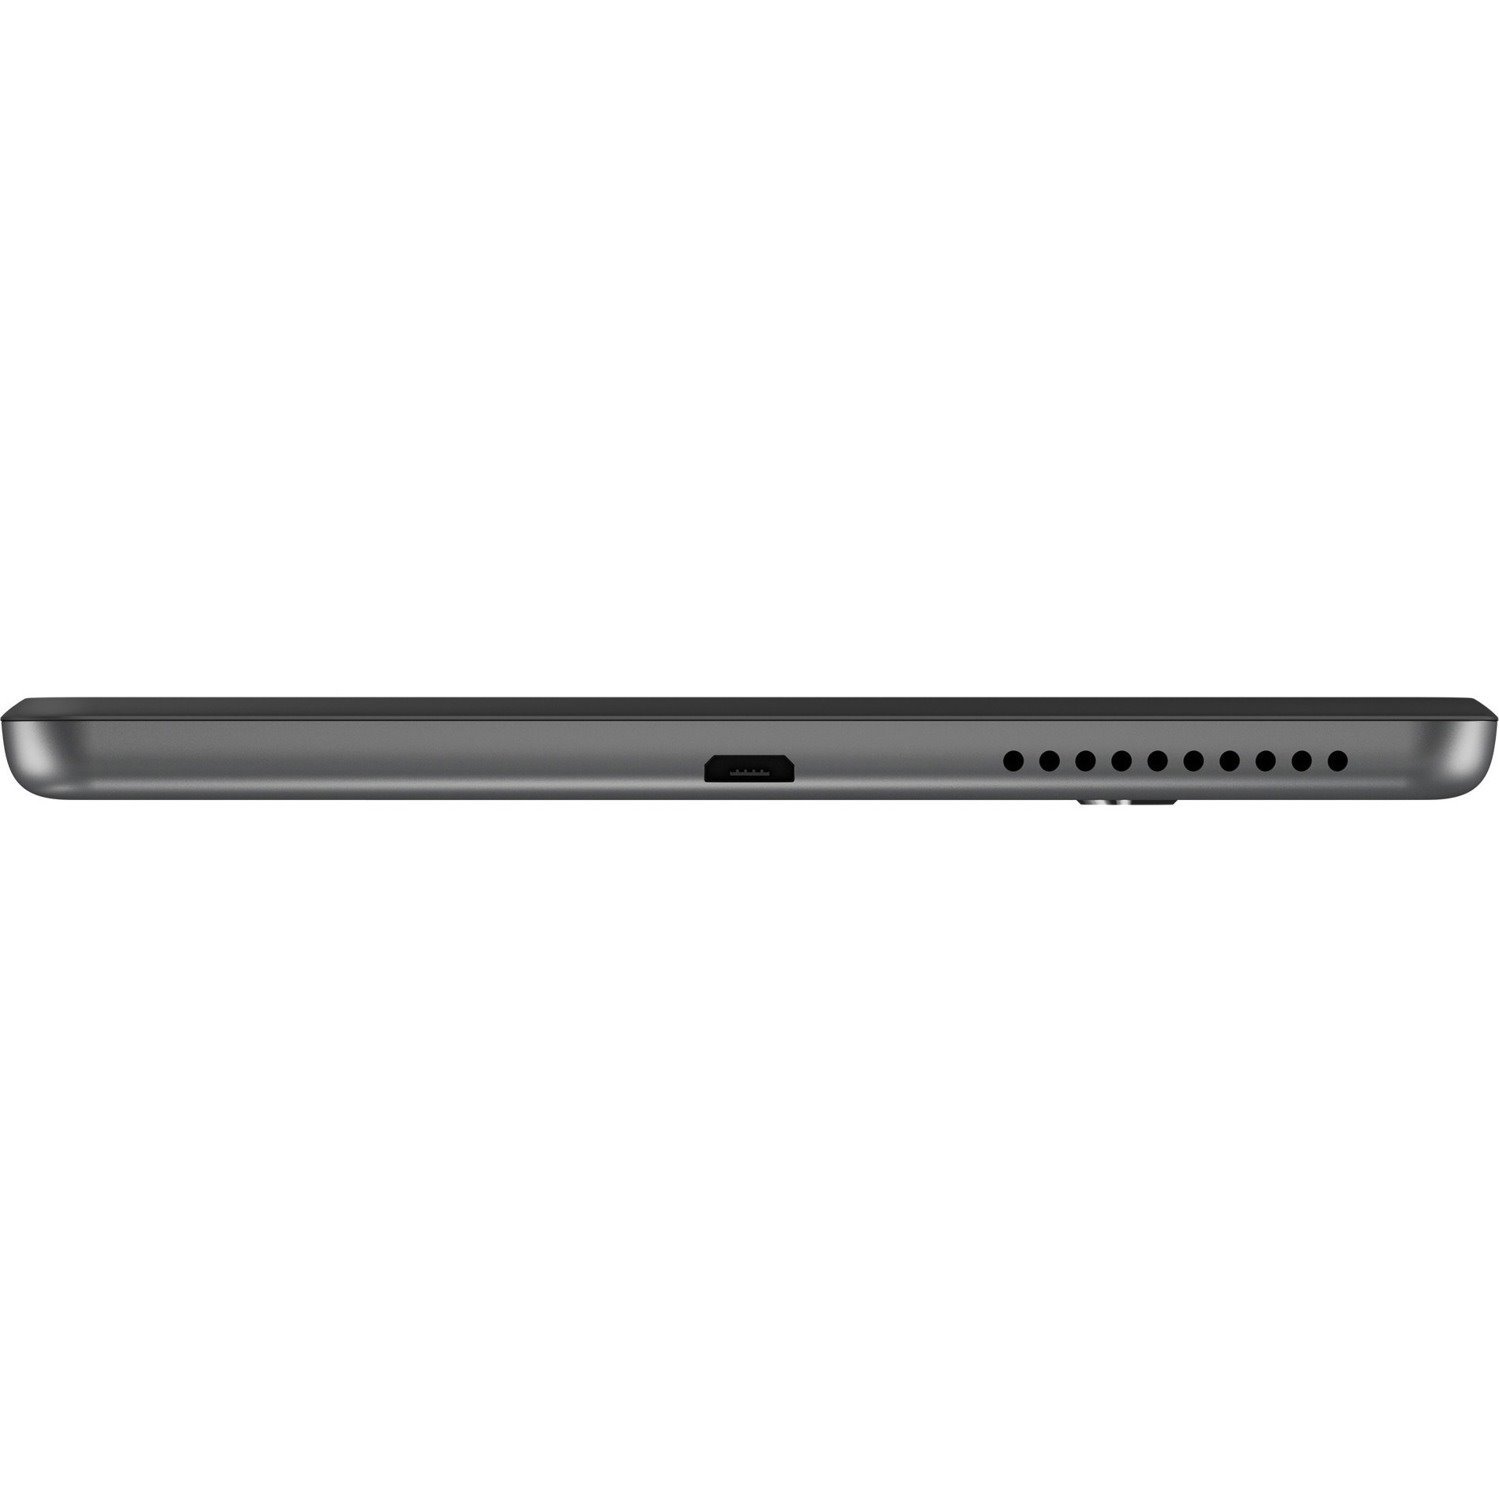 Lenovo Tab M8 HD (2nd Gen) TB-8505F Tablet - 8" HD - MediaTek MT6761 Helio A22 - 2 GB - 16 GB Storage - Android 9.0 Pie - Iron Gray